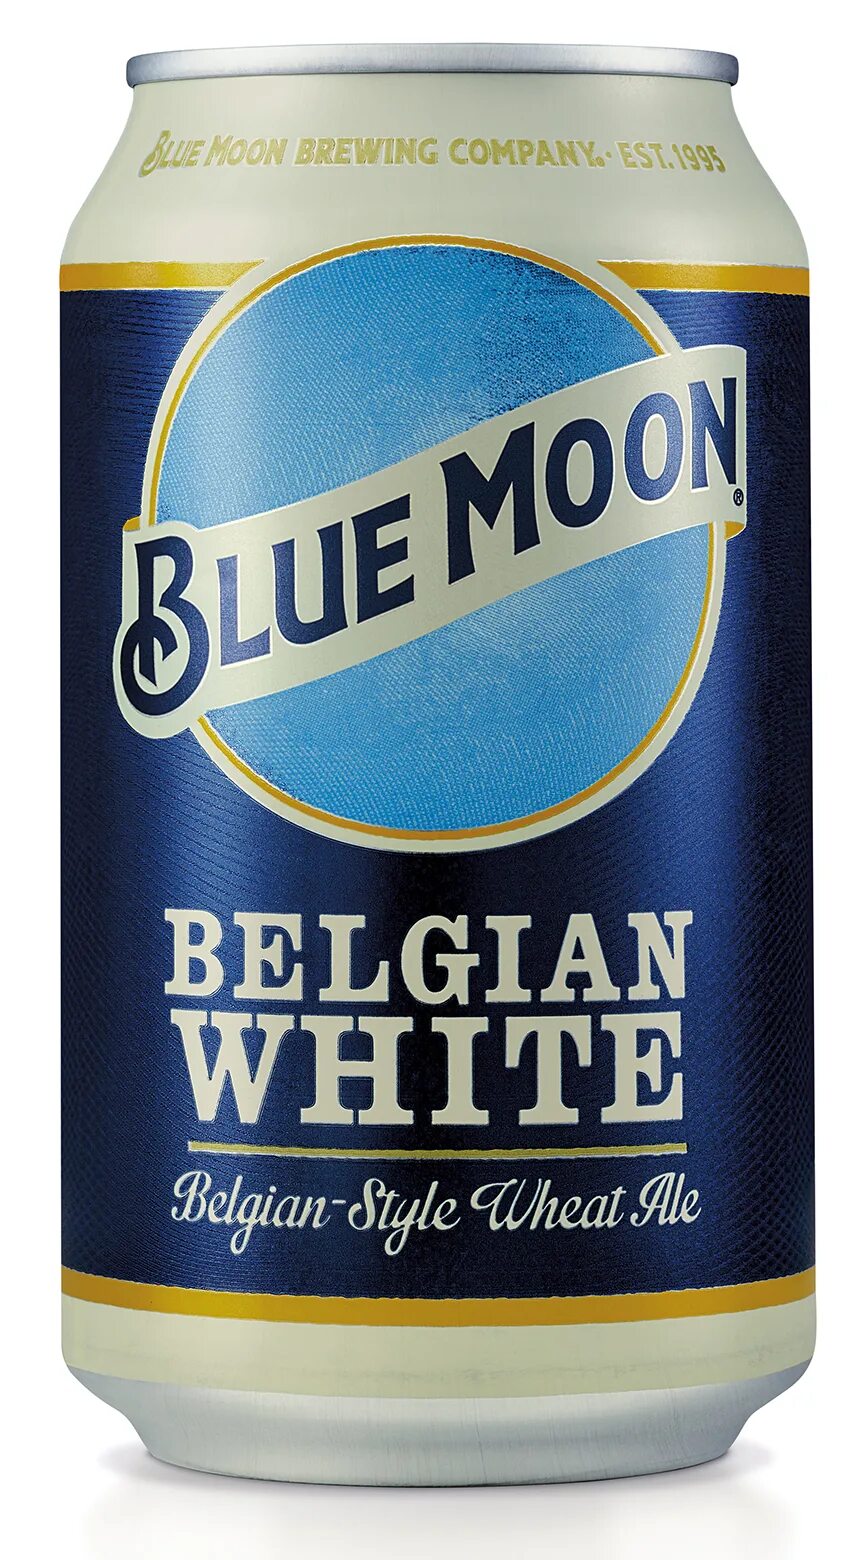 Пиво мун. Пиво Блю моон. Пивной напиток Блю Мун. Пиво голубая Луна. Blue Moon Belgian White.